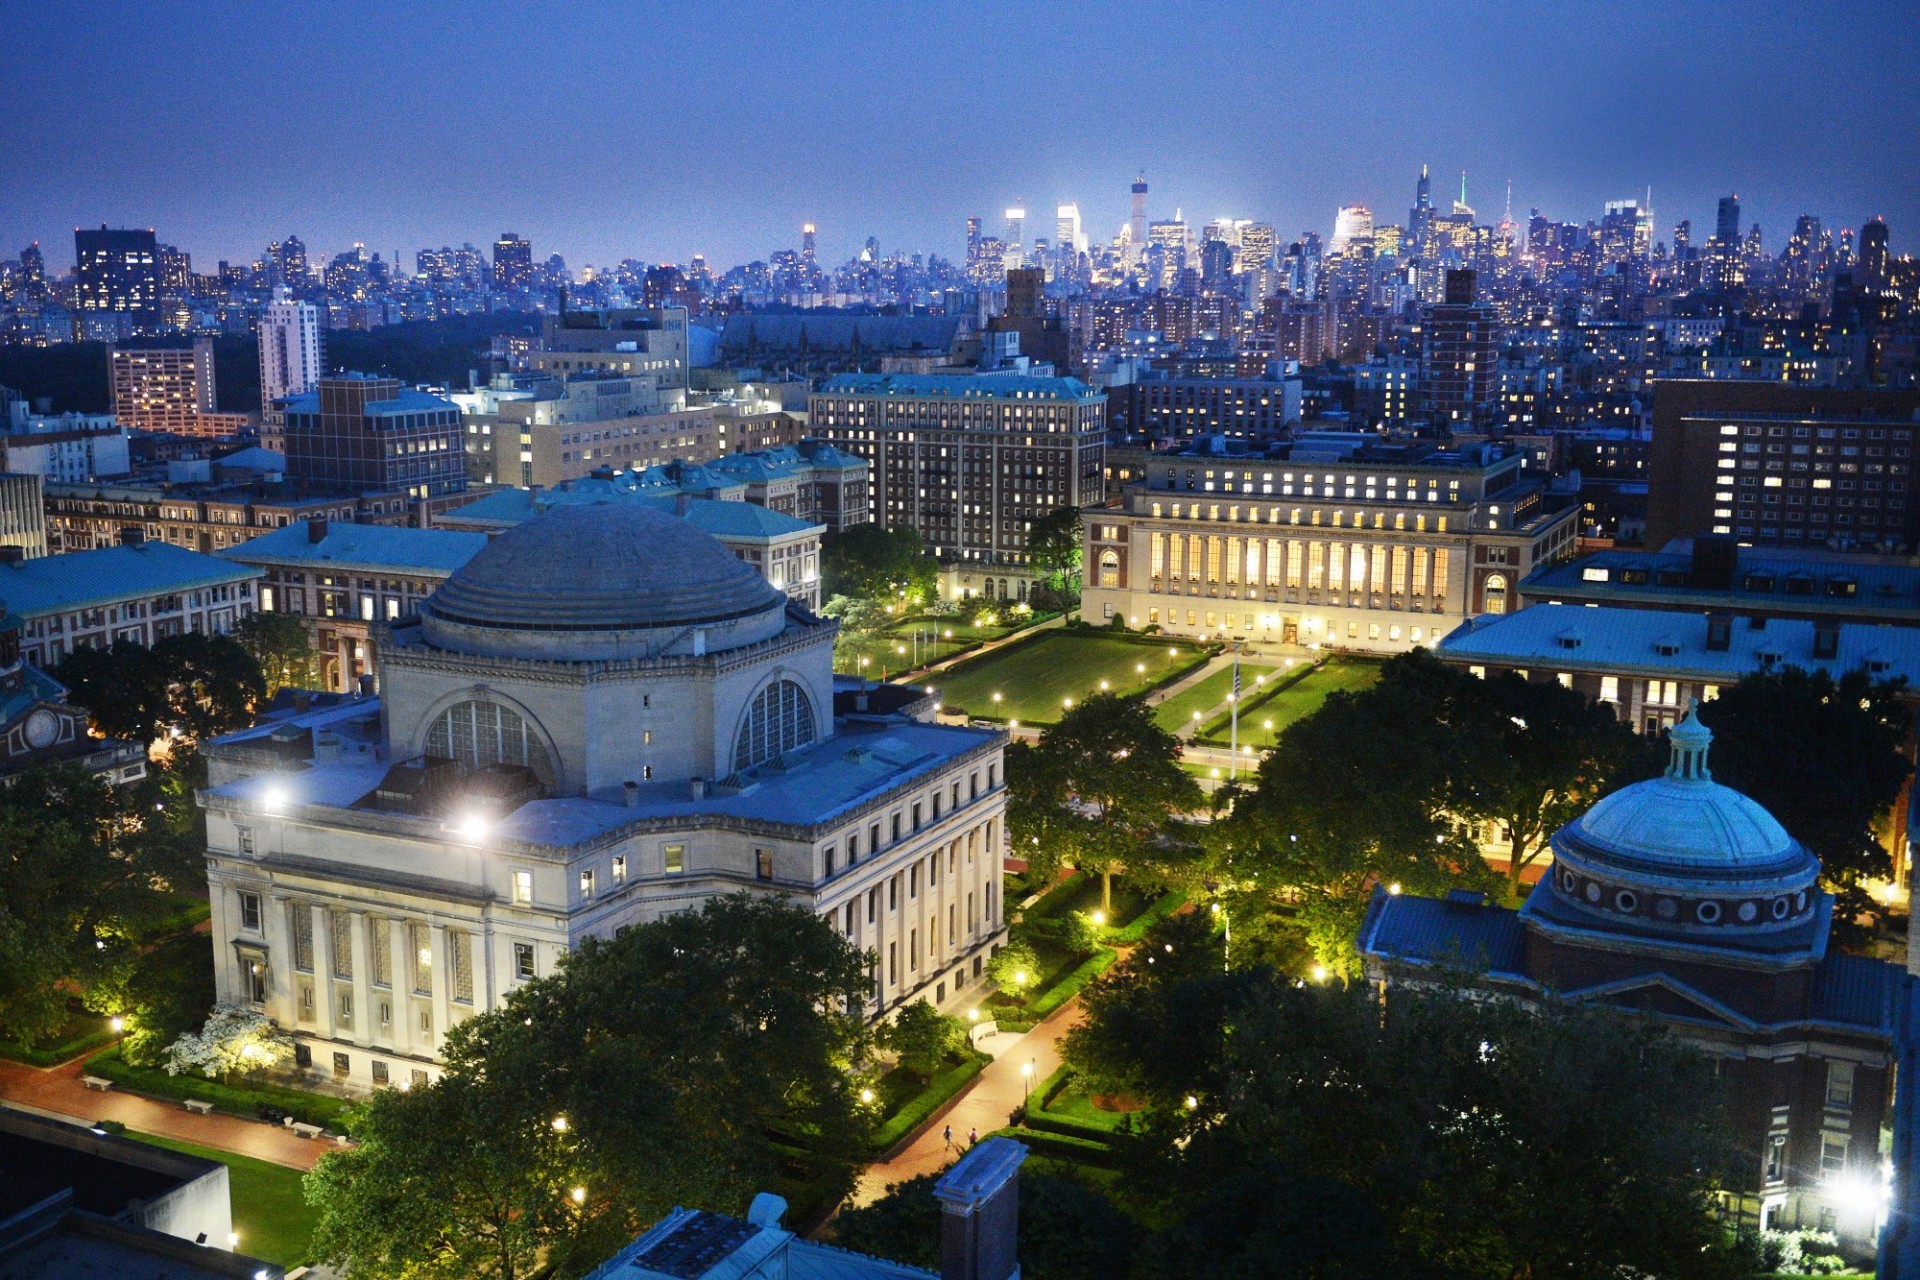 Columbia University nighttime aerial